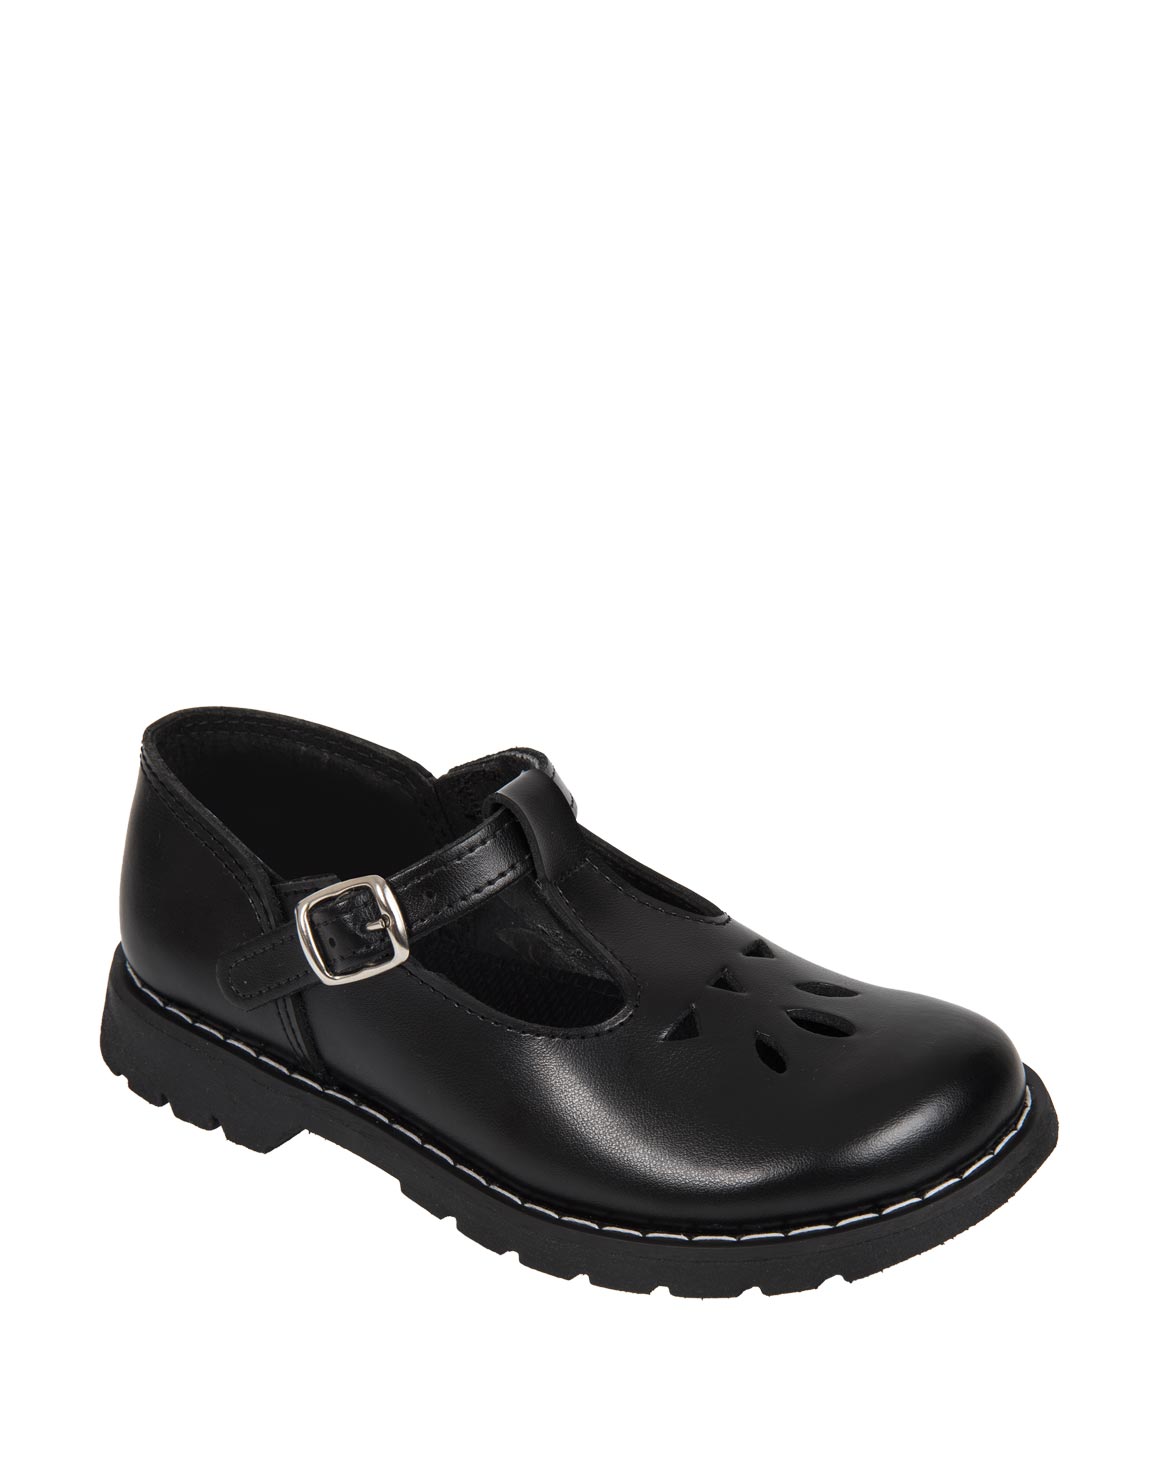 Leather Stichdown School Shoes Size 8 1 Younger Girl X BLACK 504399108 ?V=VZk@&o=eyJidWNrZXQiOiJ3dy1vbmxpbmUtaW1hZ2UtcmVzaXplIiwia2V5IjoiaW1hZ2VzL2VsYXN0aWNlcmEvcHJvZHVjdHMvaGVyby8yMDE5LTA1LTA5LzUwNDM5OTEwOF9YQkxBQ0tfaGVyby5qcGcifQ&